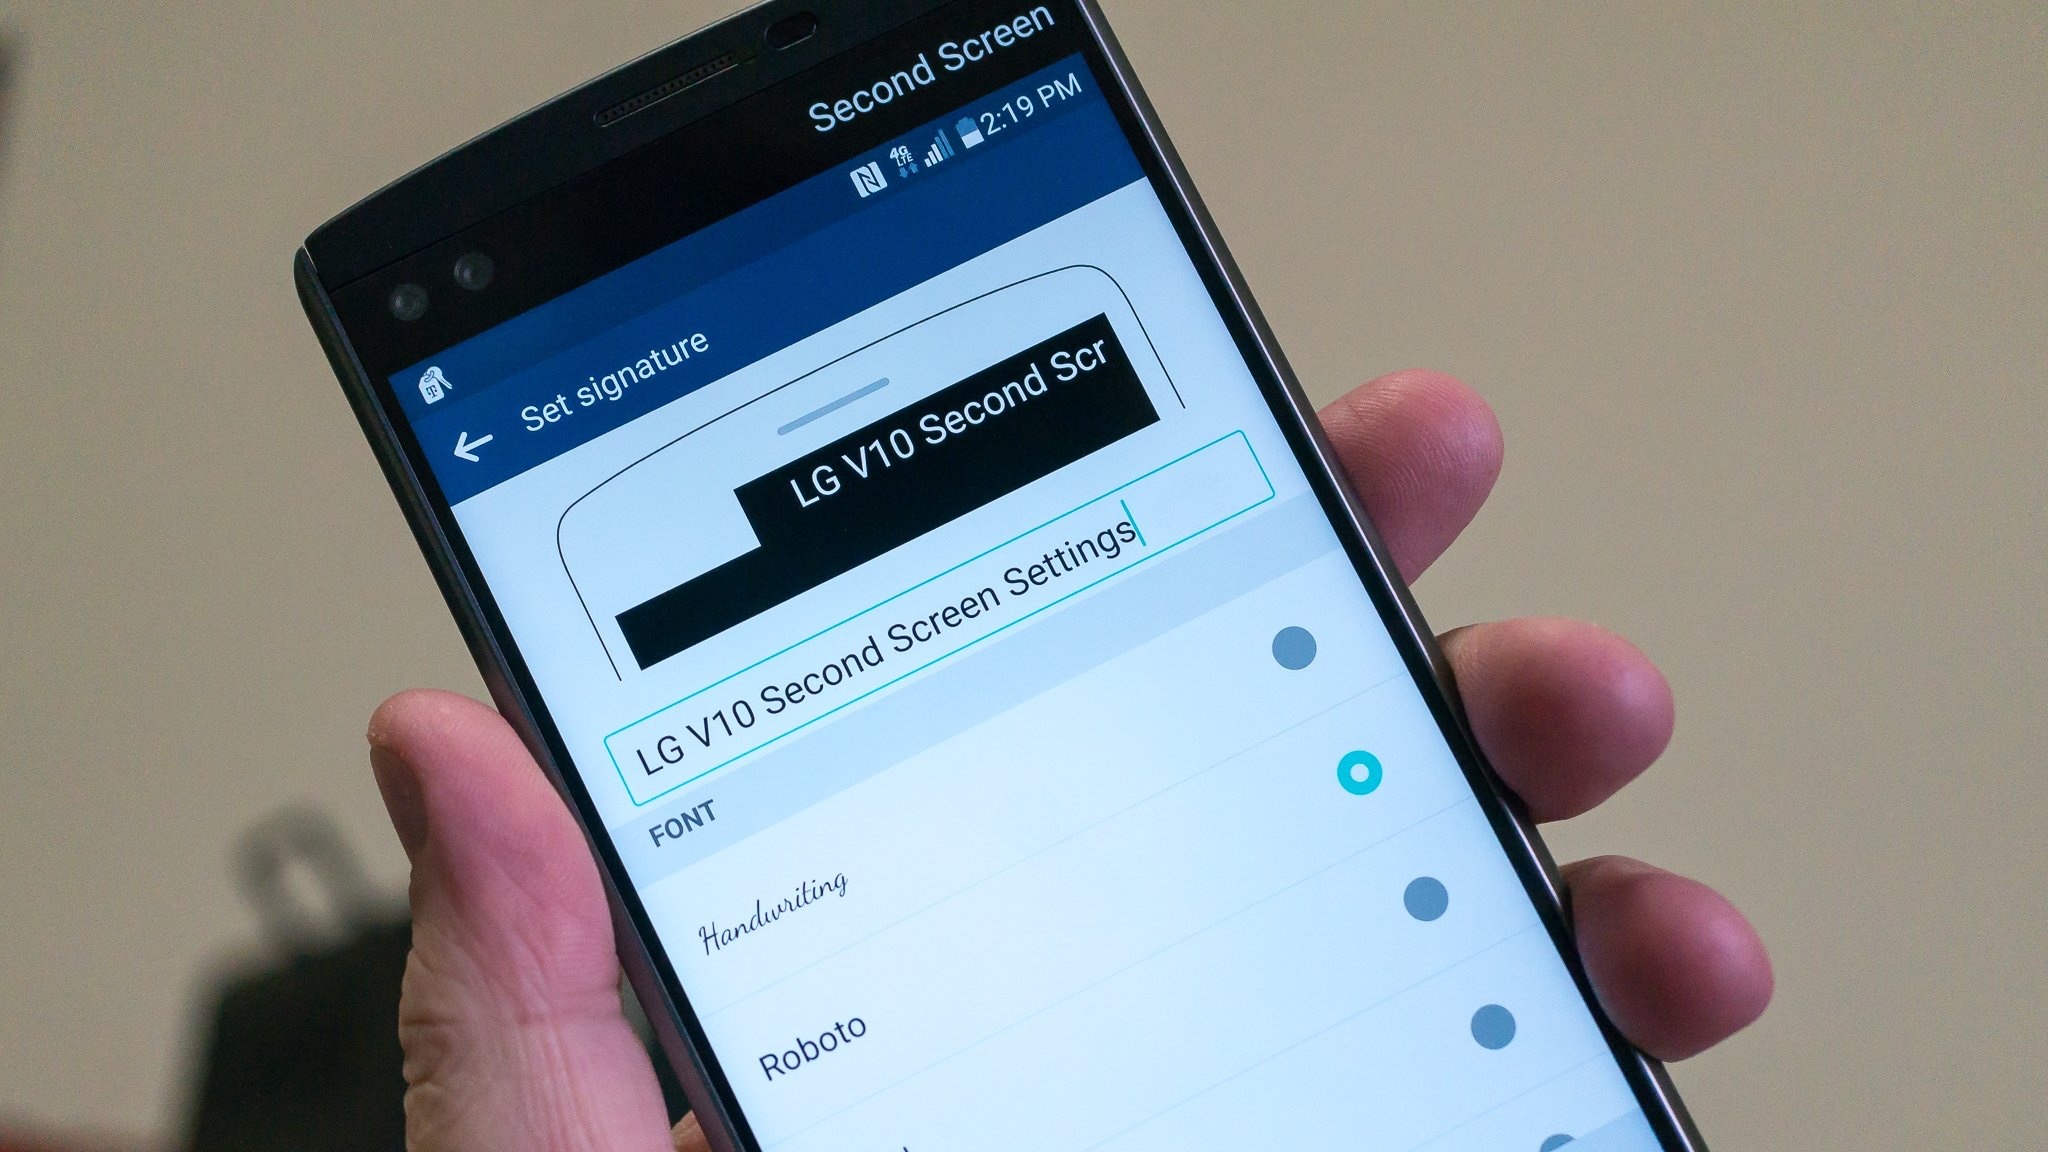 LG V10 Second Screen settings